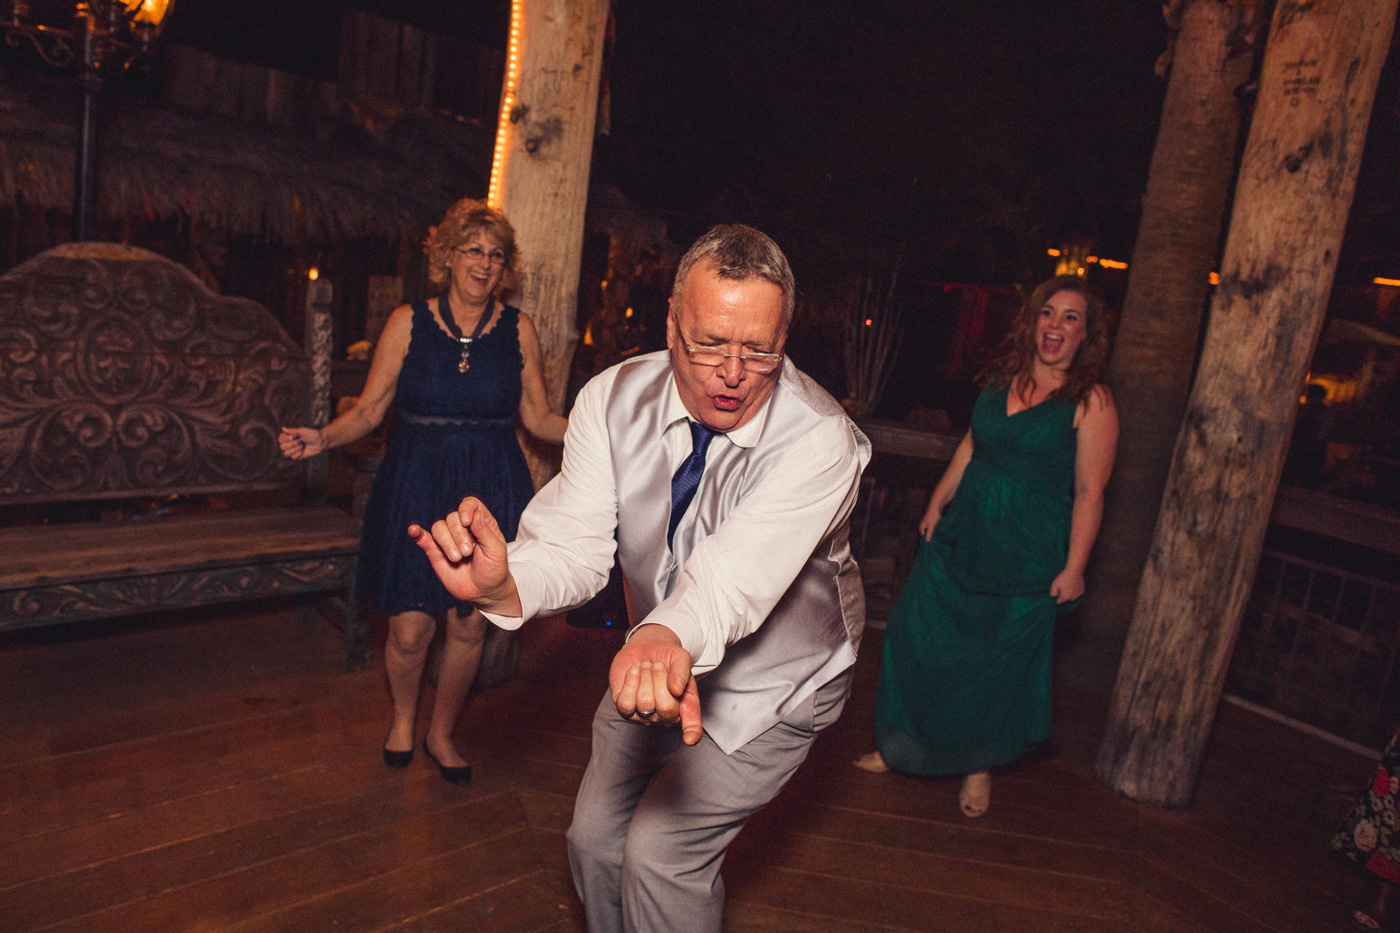 fun-wedding-dancing